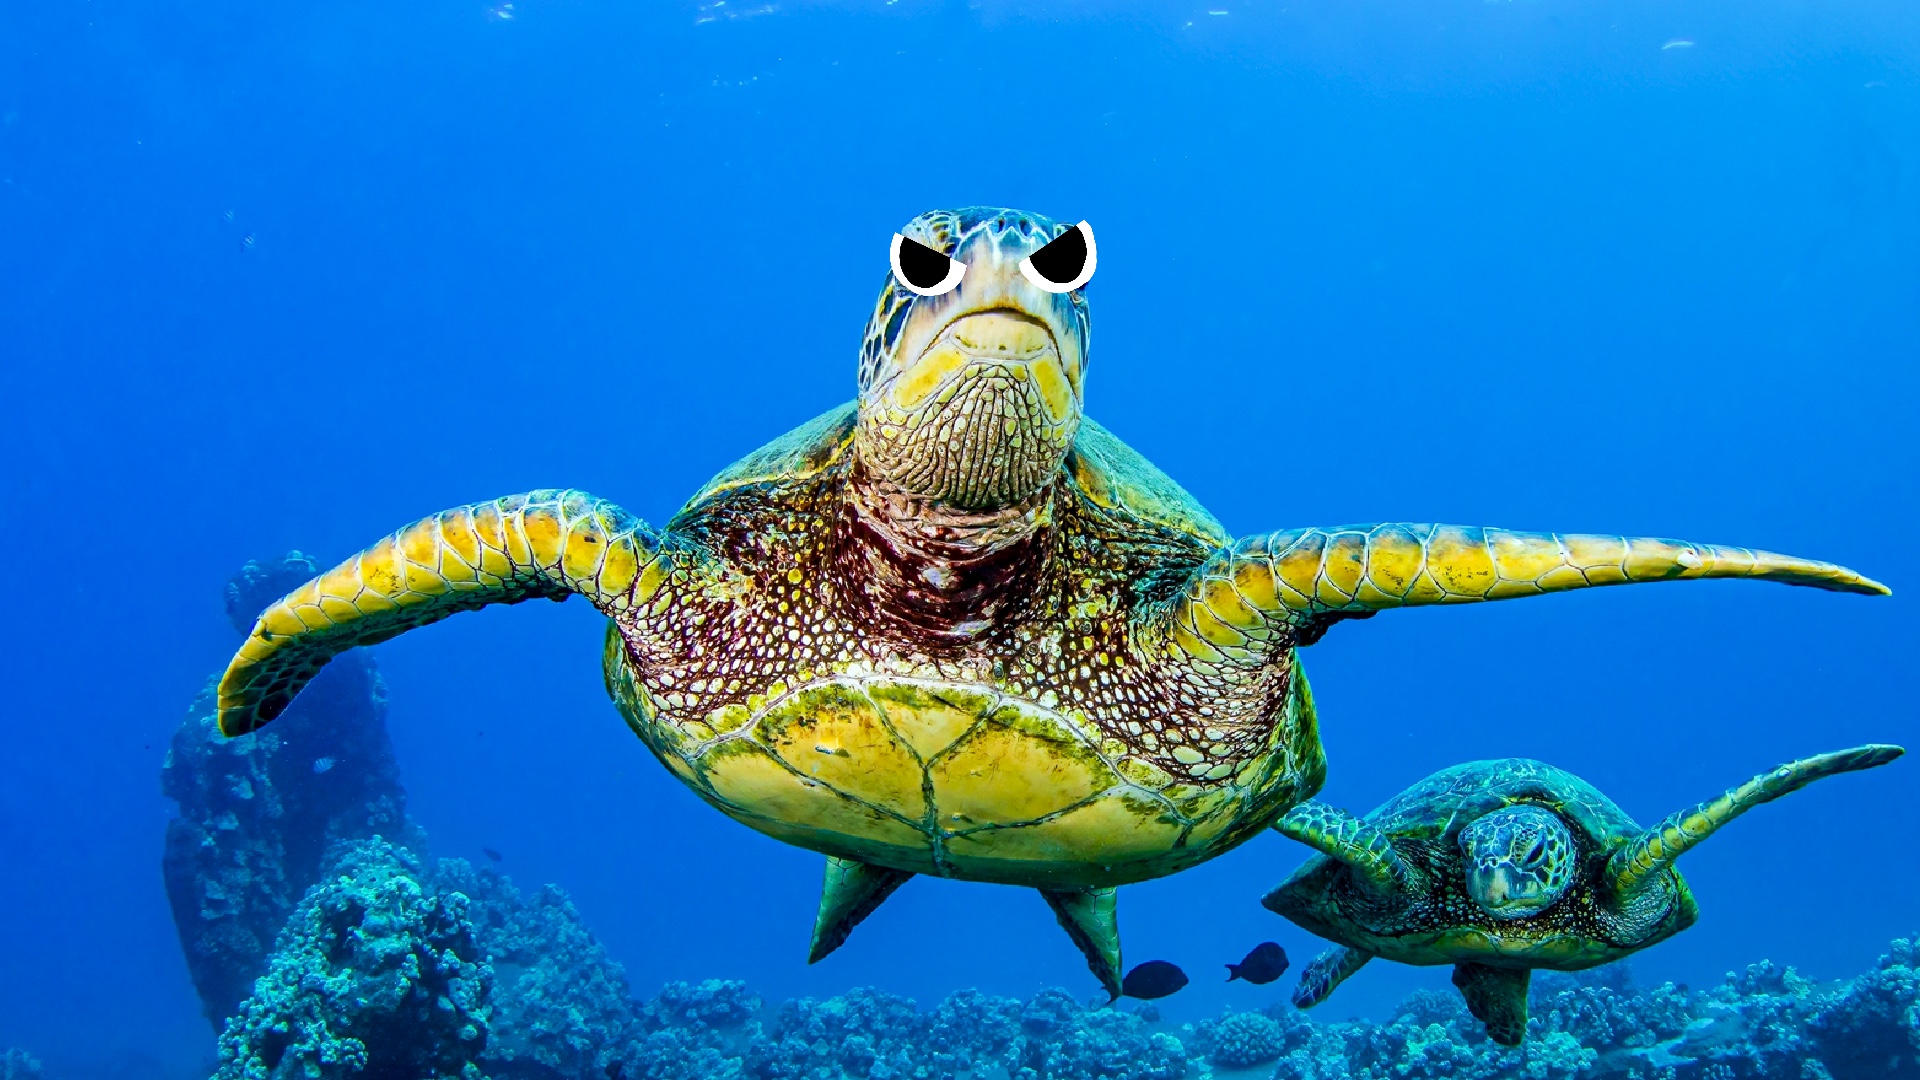 A turtle swimming in the sea